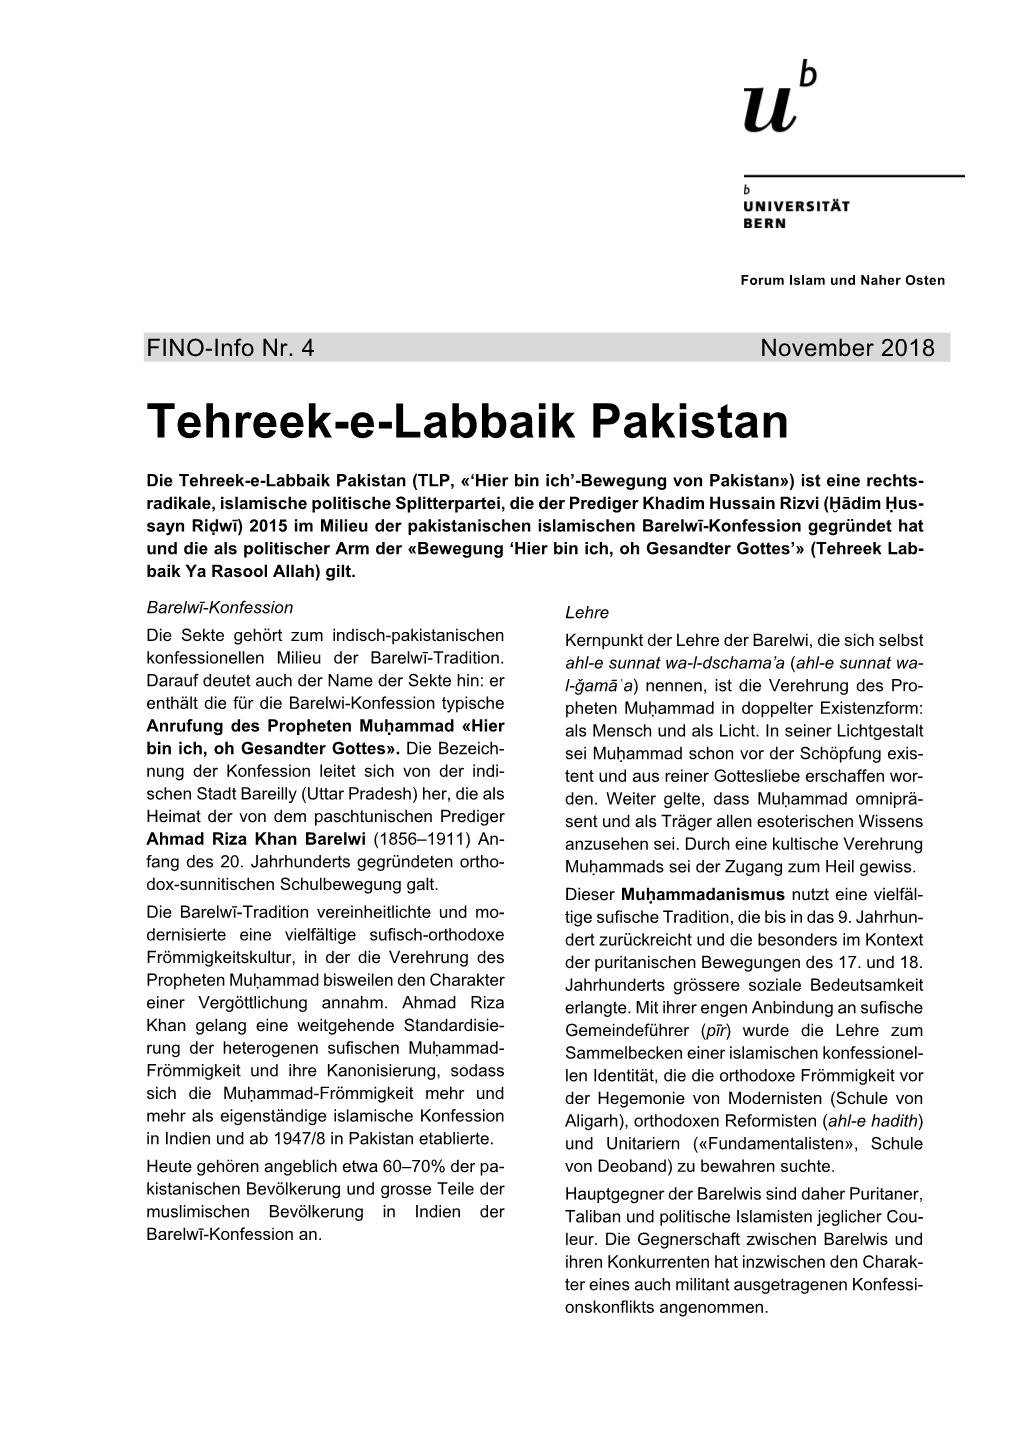 Tehreek-E-Labbaik Pakistan